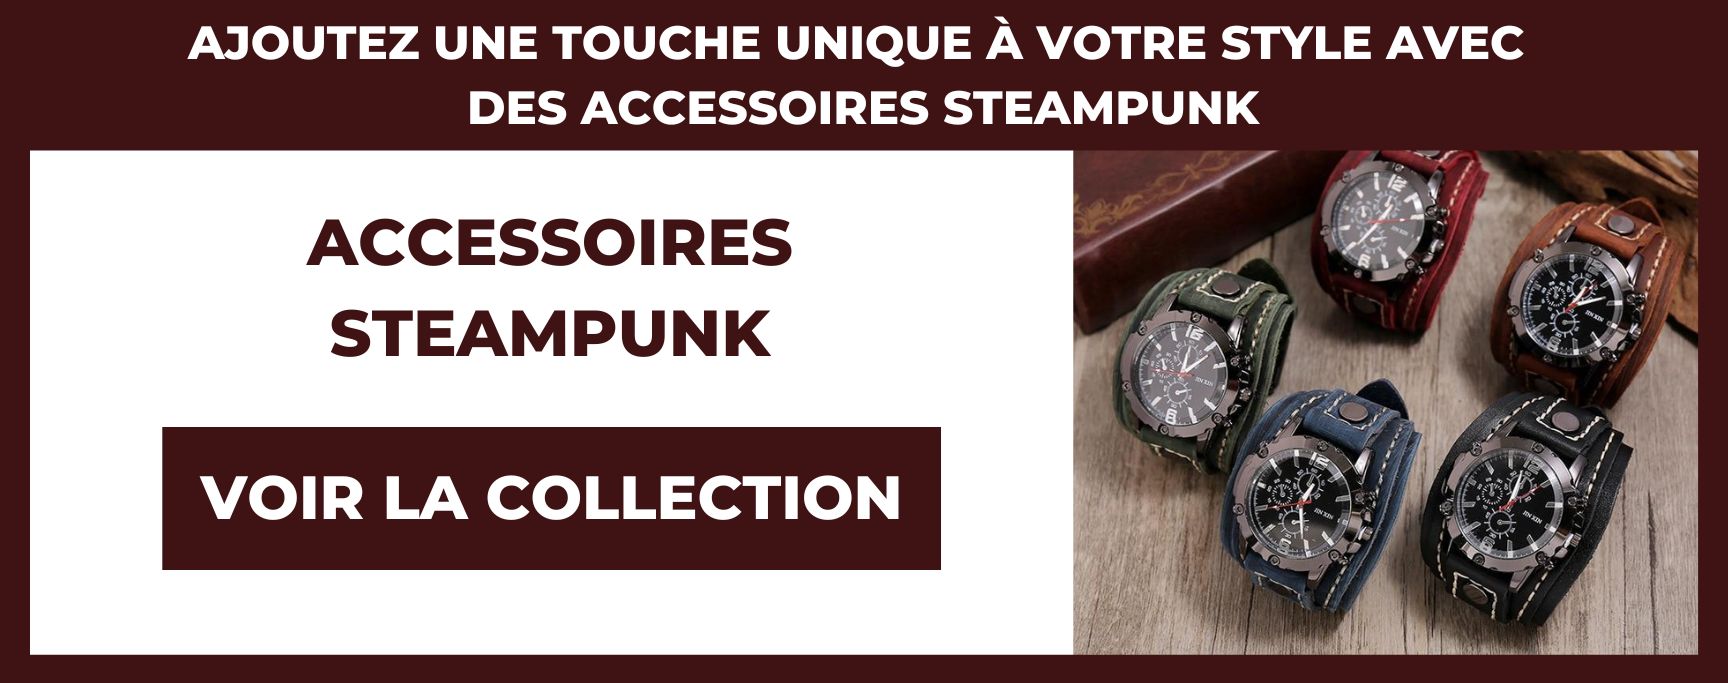 accessoires steampunk